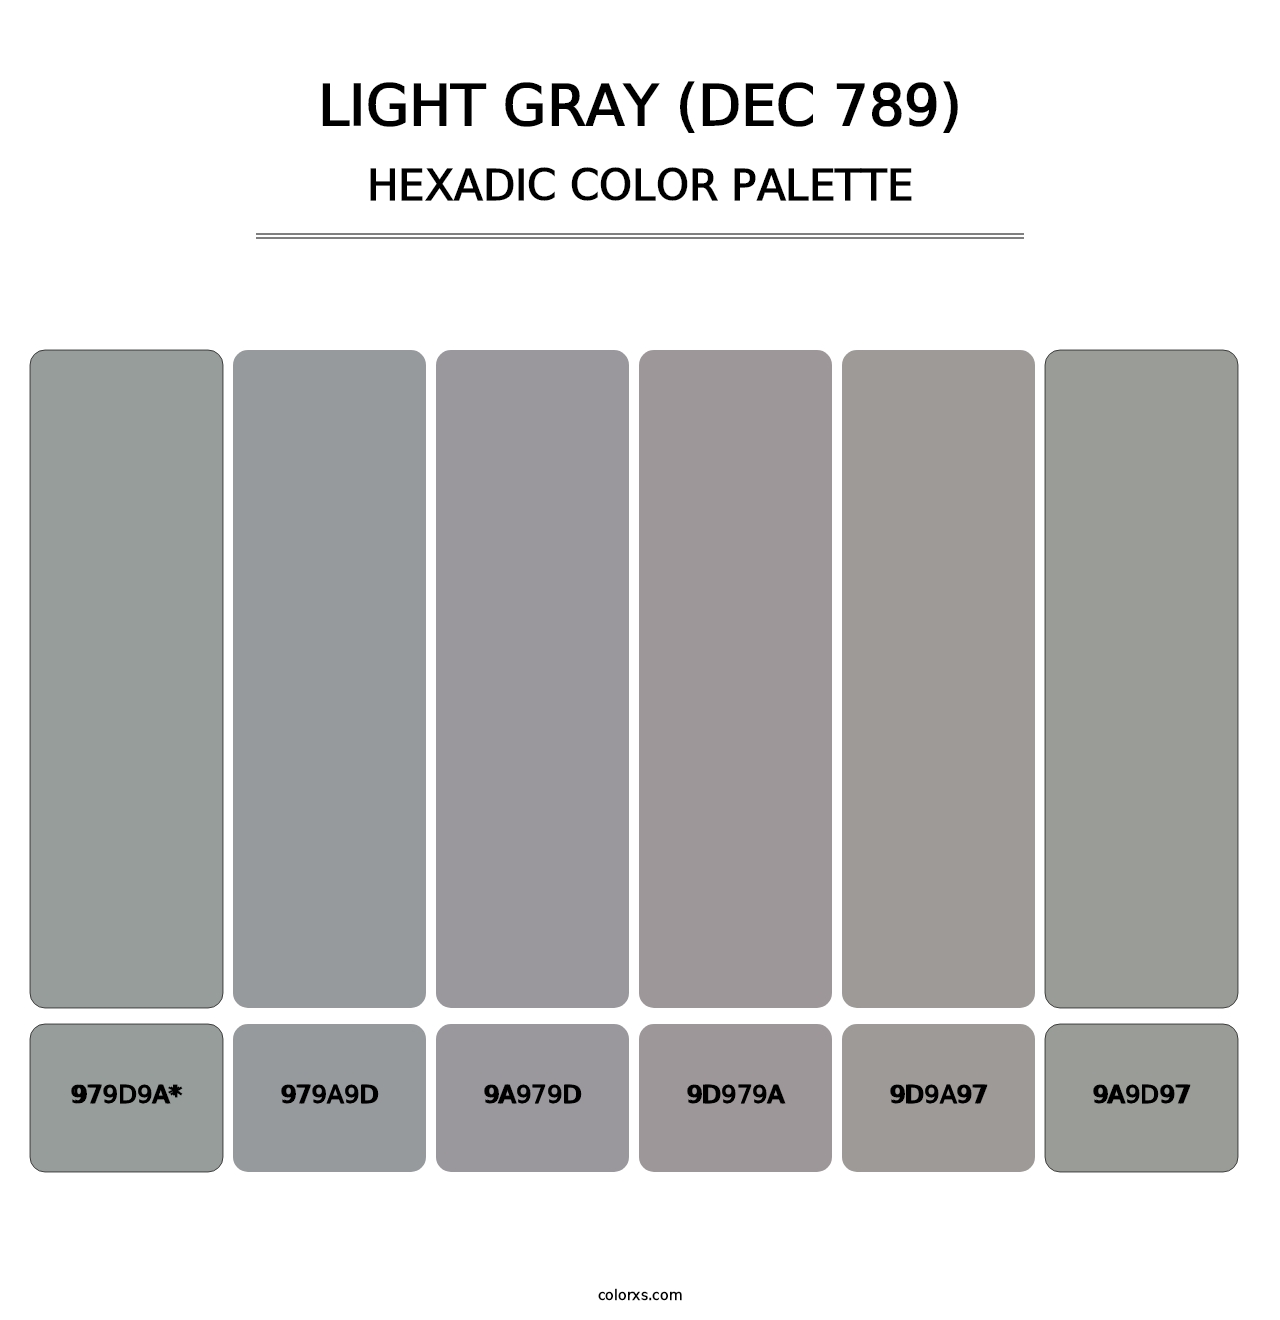 Light Gray (DEC 789) - Hexadic Color Palette